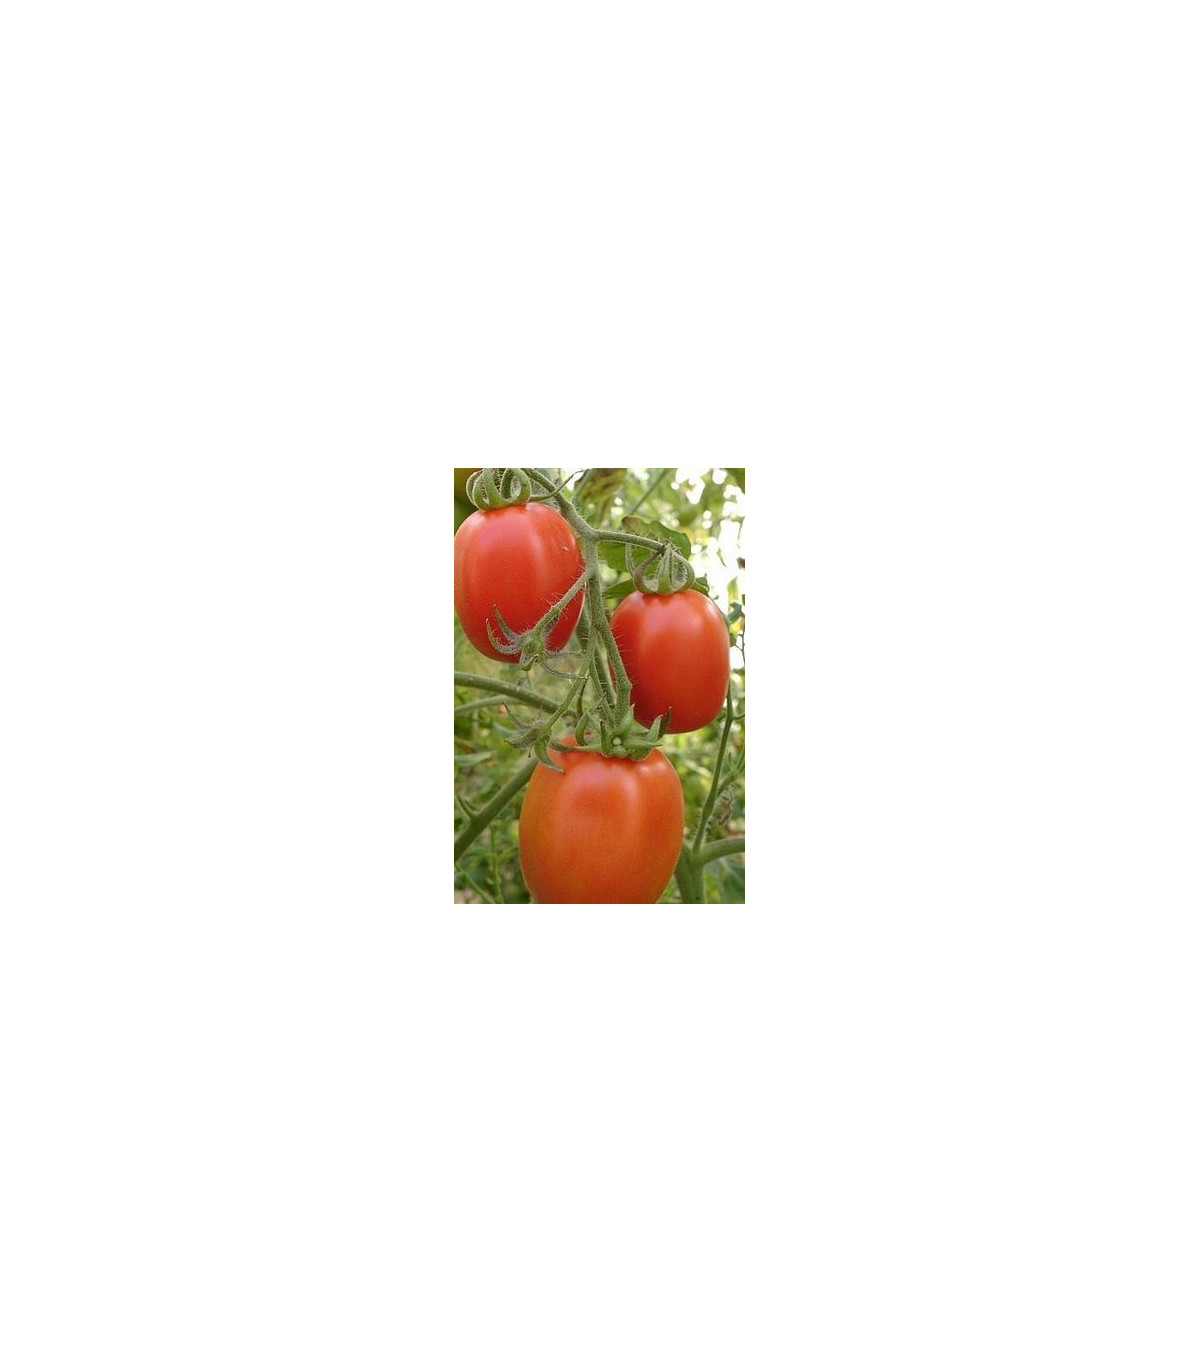 Paradajka Salus - kríčková - Solanum lycopersicum L. - predaj semien paradajok - 0,2 g